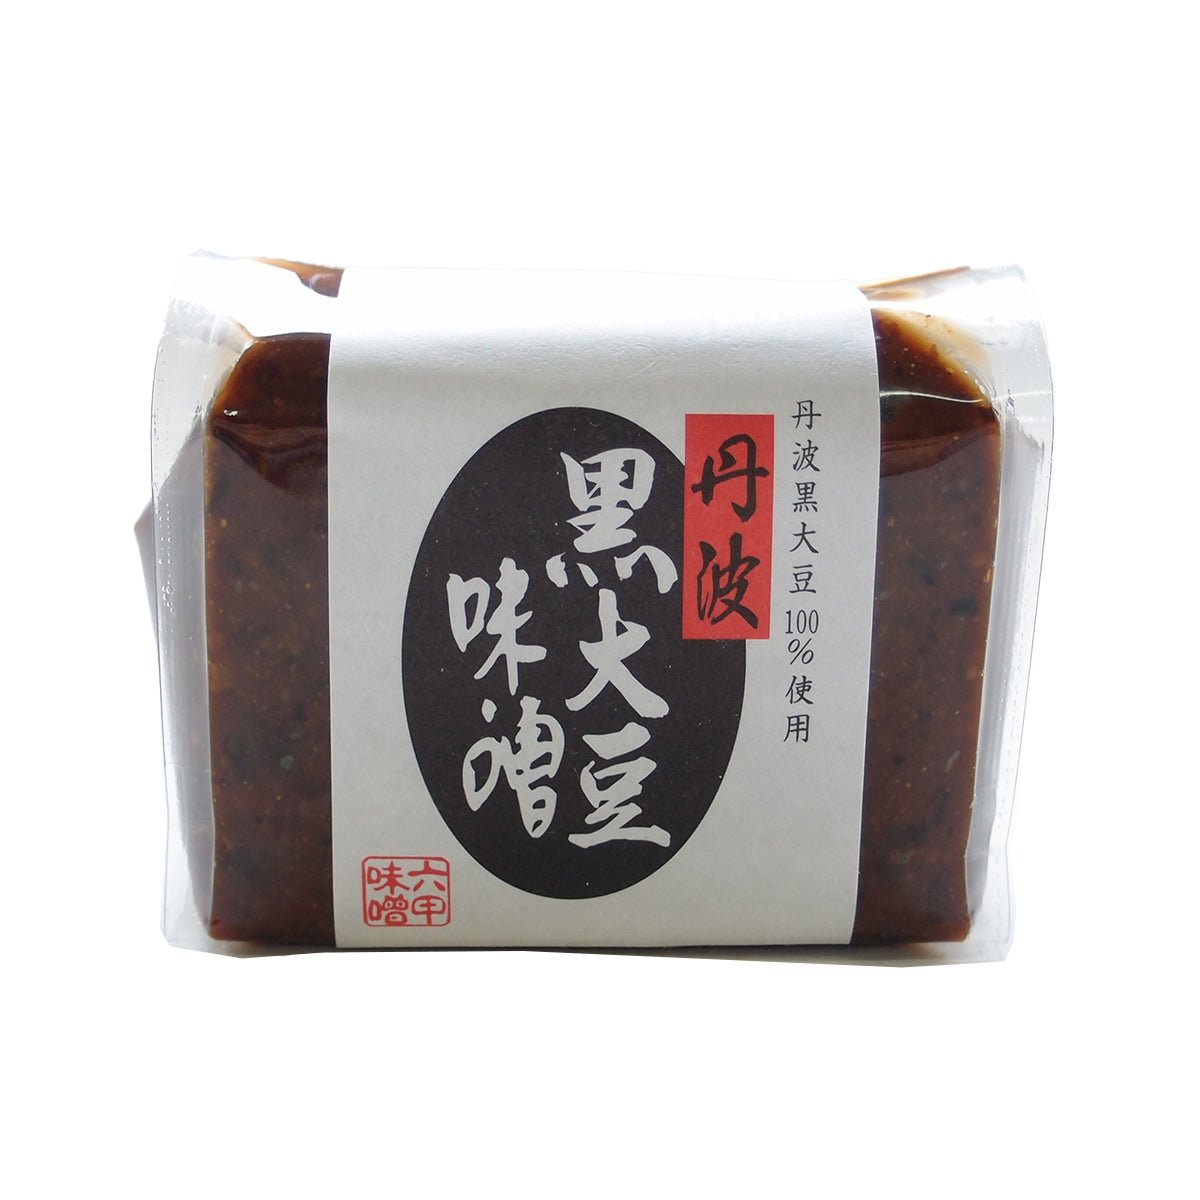 Rokko miso Black soybeans Miso - Tokyo Fresh Direct